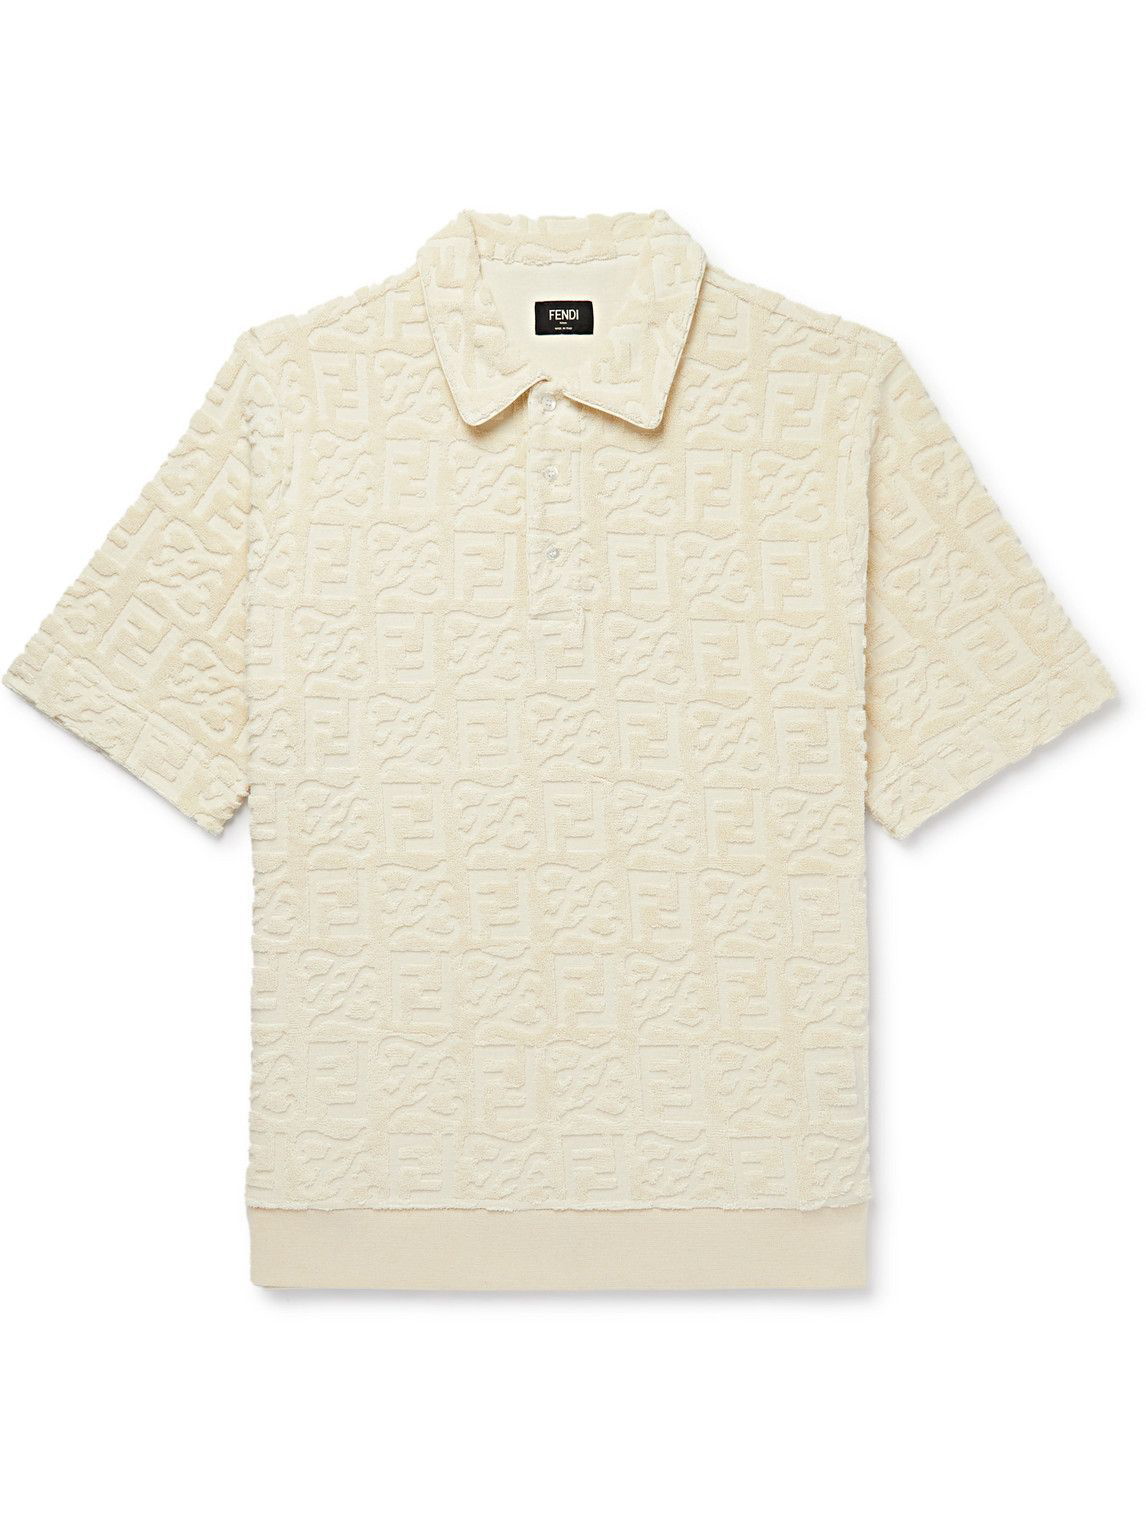 Fendi - Logo-Jacquard Cotton-Terry Polo Shirt - Neutrals Fendi